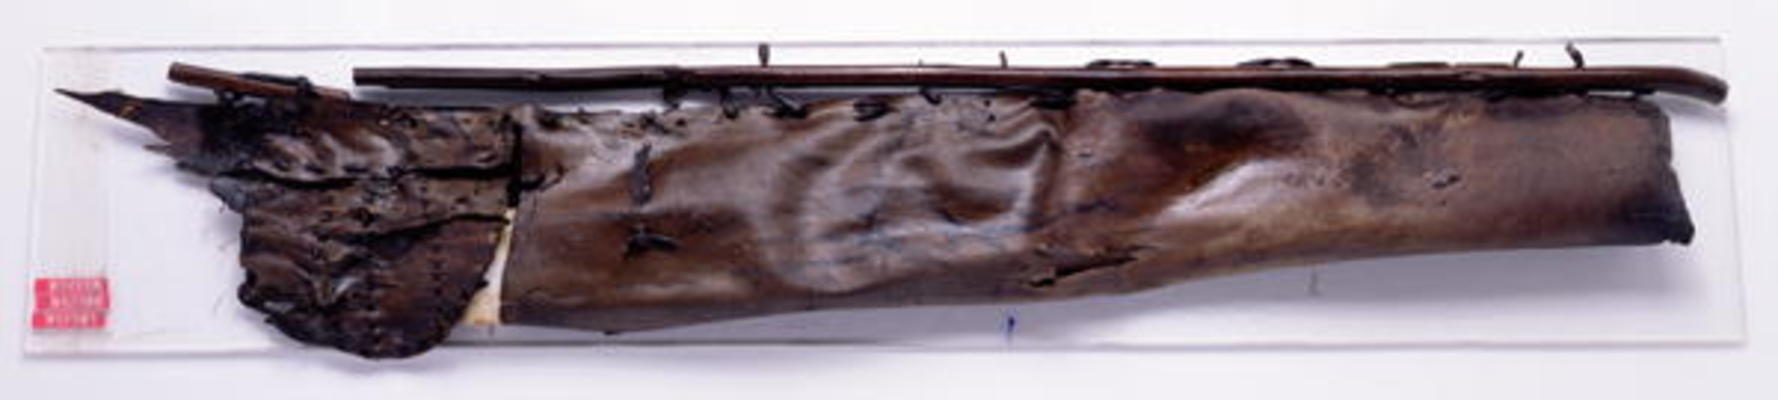 Quiver found with the Oetzi Iceman (chamois leather) von Copper Age